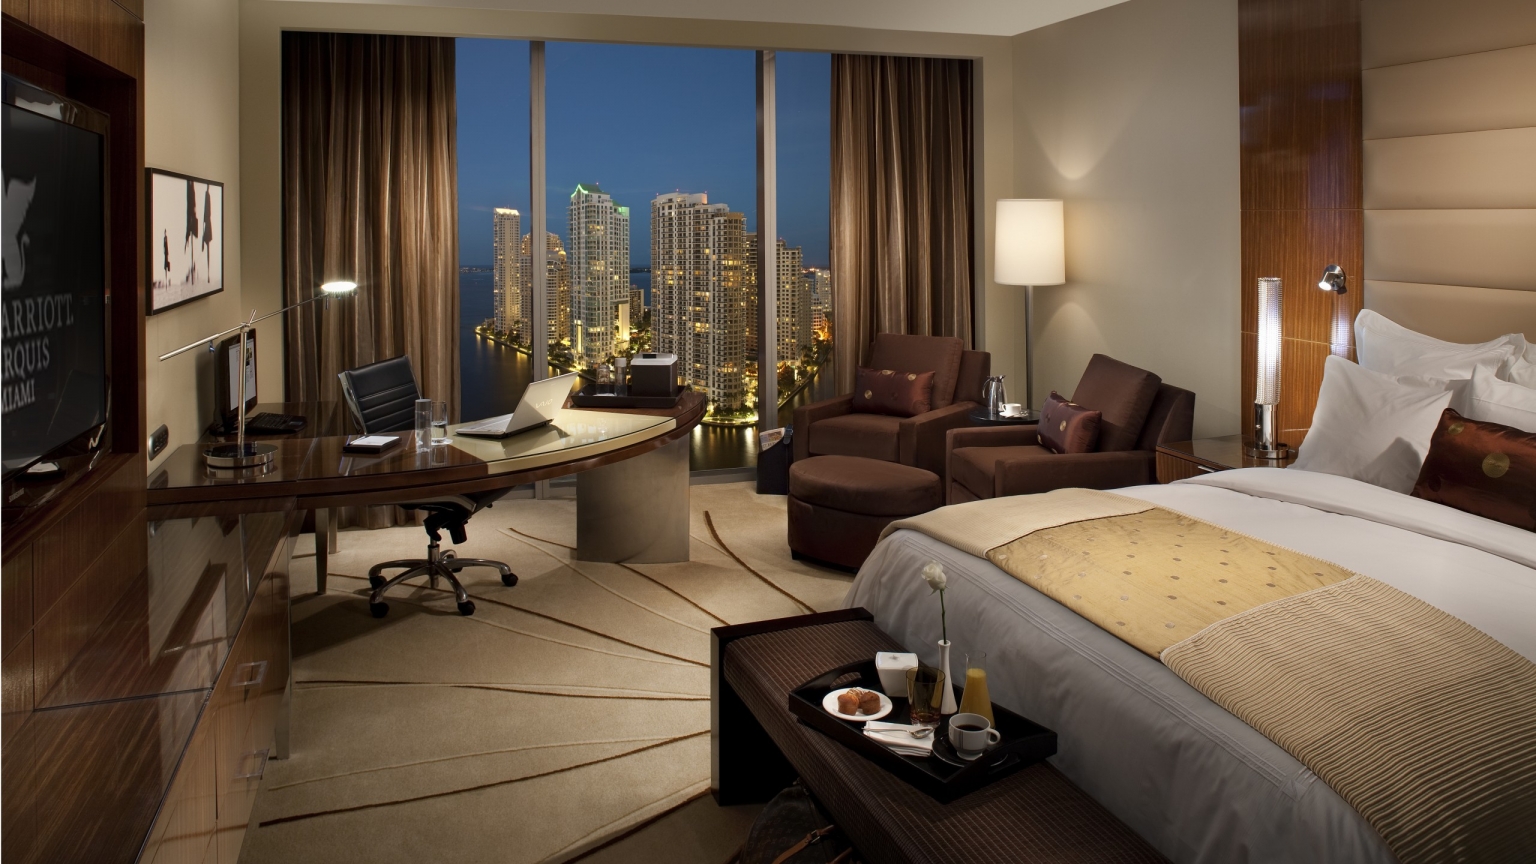 Miami Florida Hotel Room for 1536 x 864 HDTV resolution